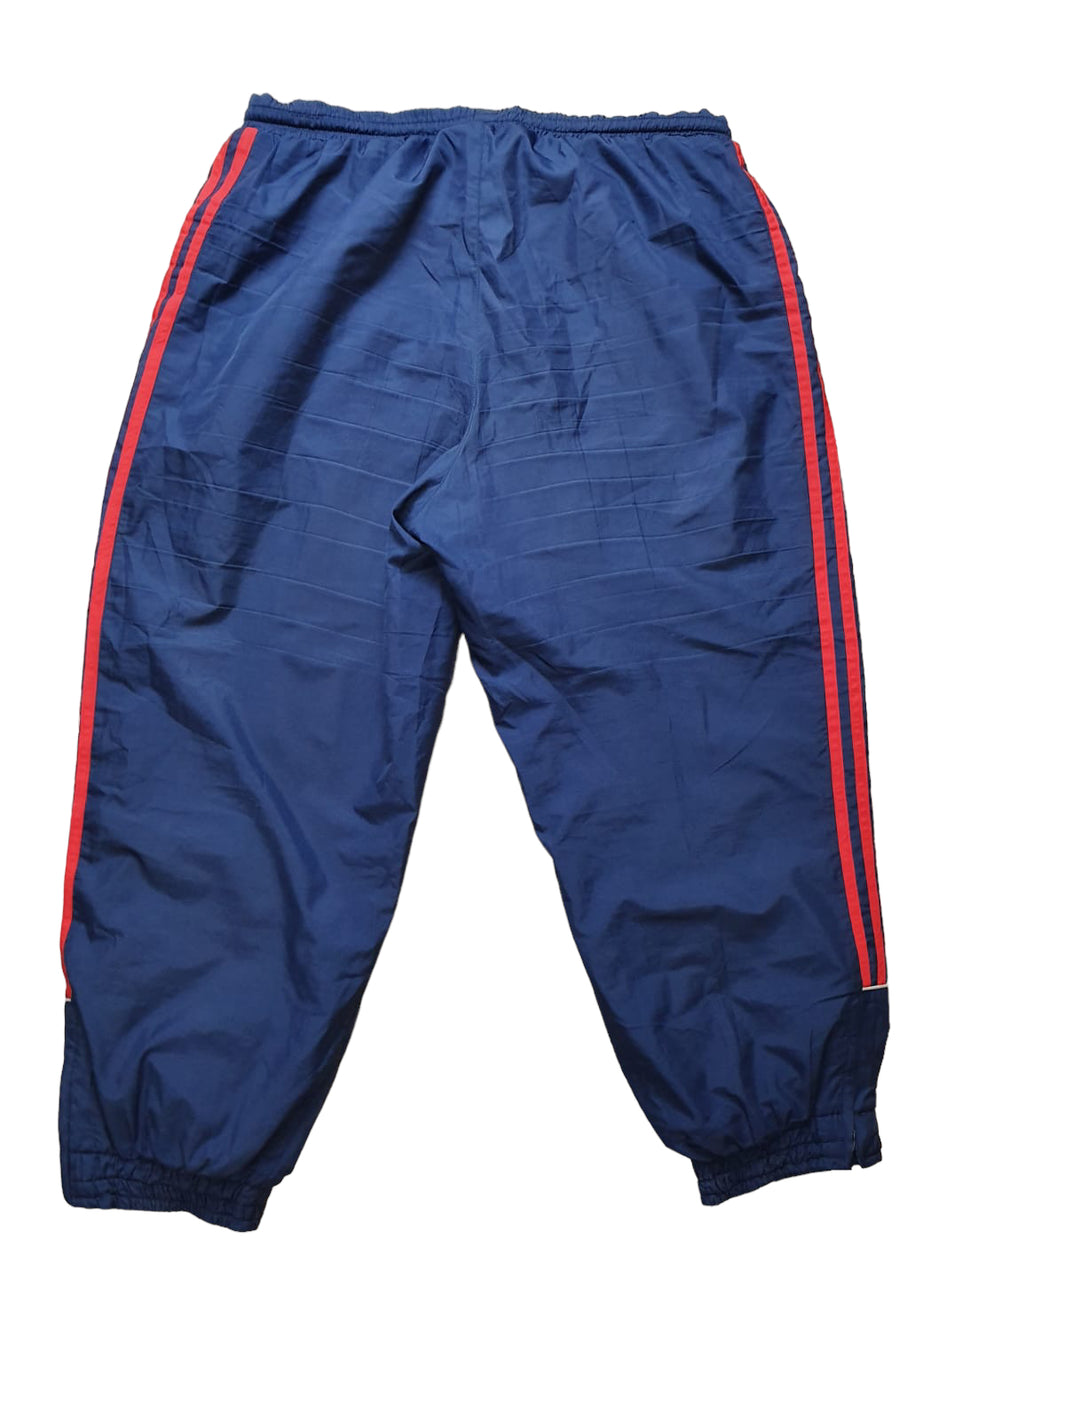 Adidas Track Pants 90s